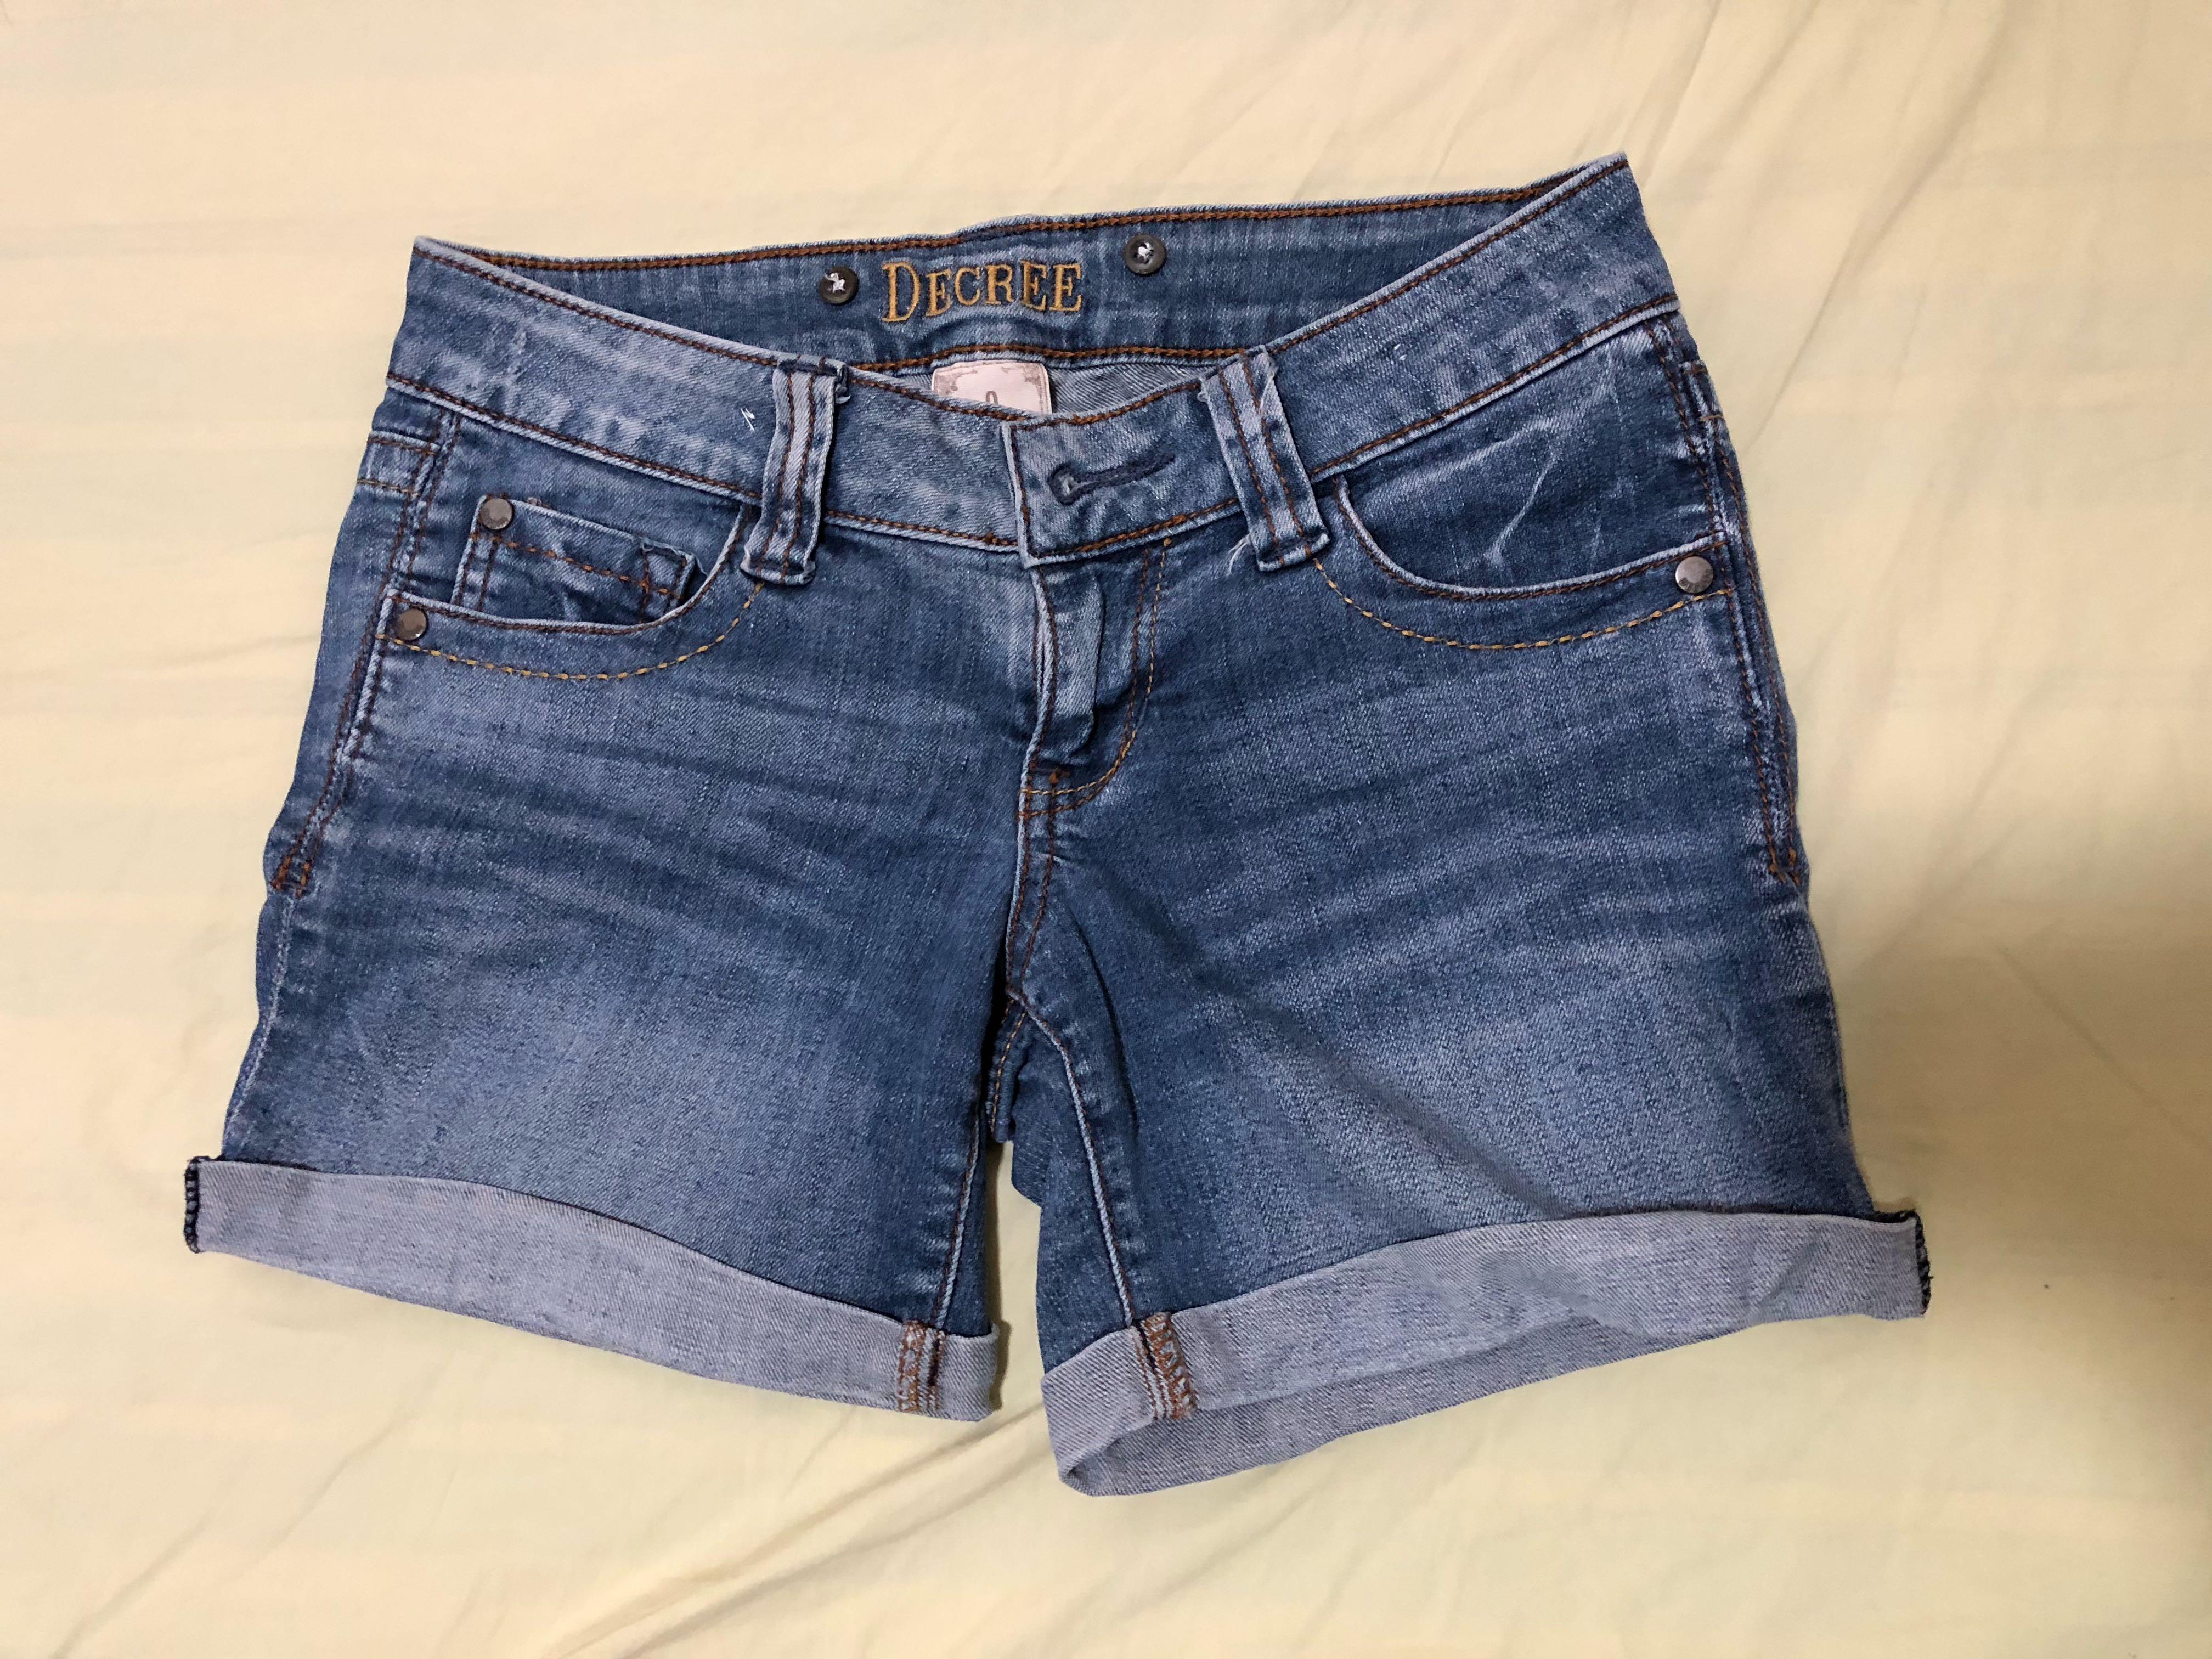 decree jean shorts